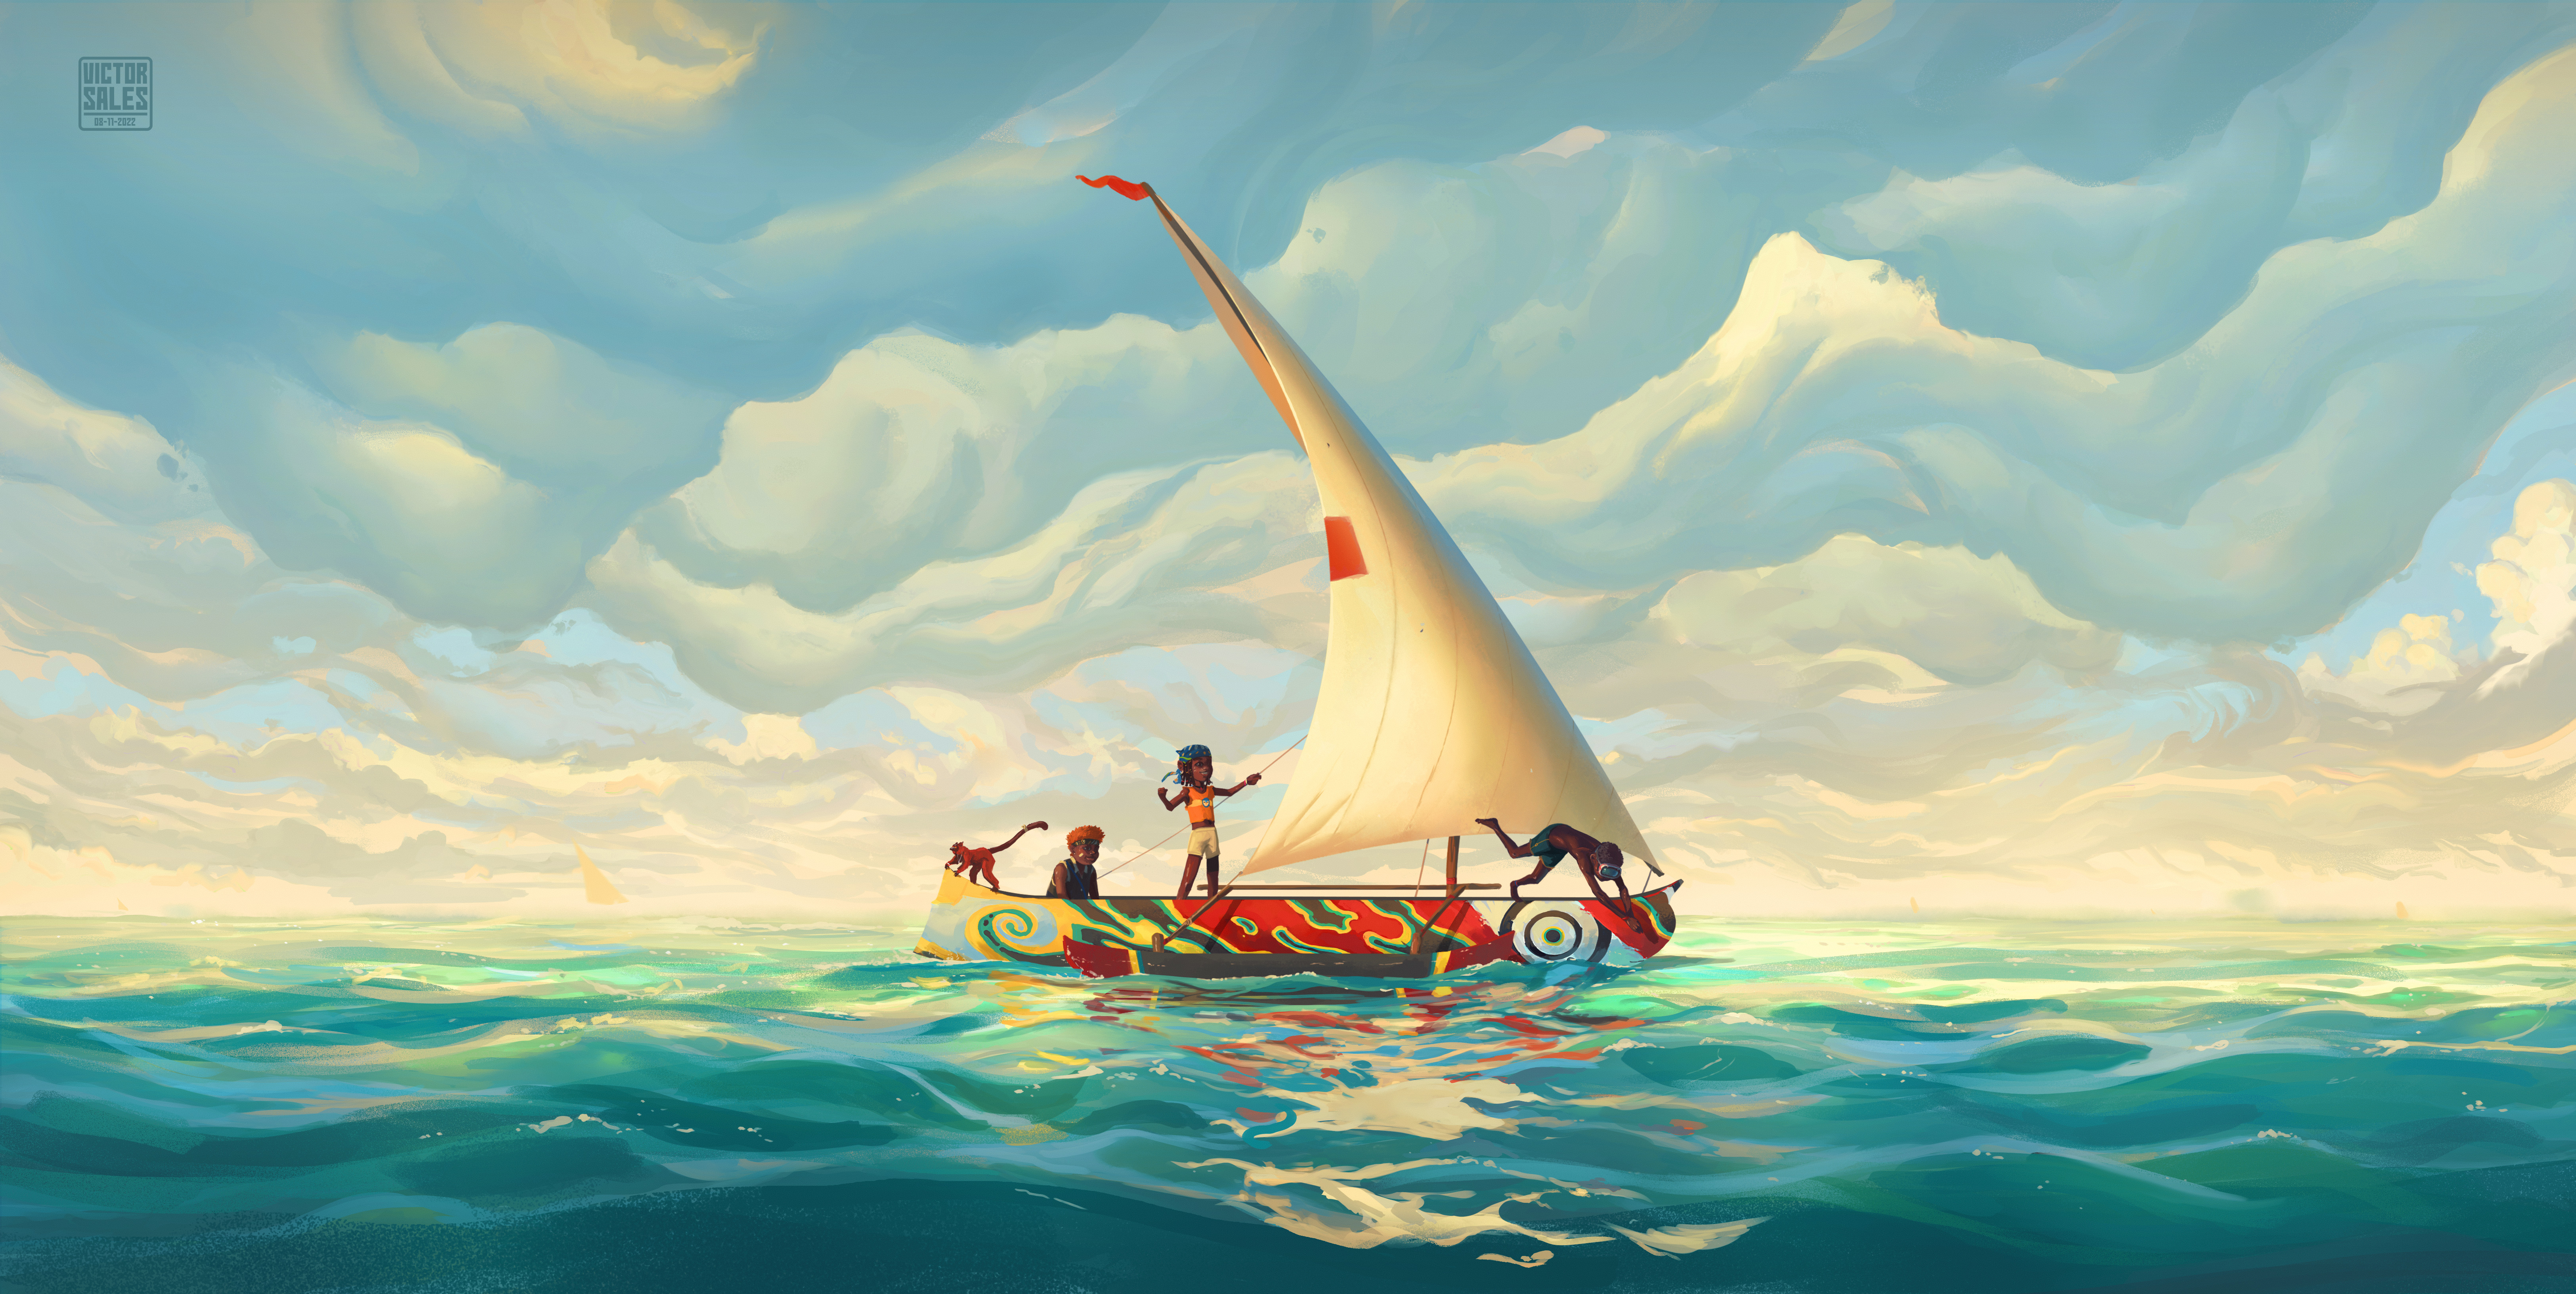 VSales Digital Art Artwork Illustration Landscape Sea Water Boat Clouds Children Sailing Ship Nature 6500x3264